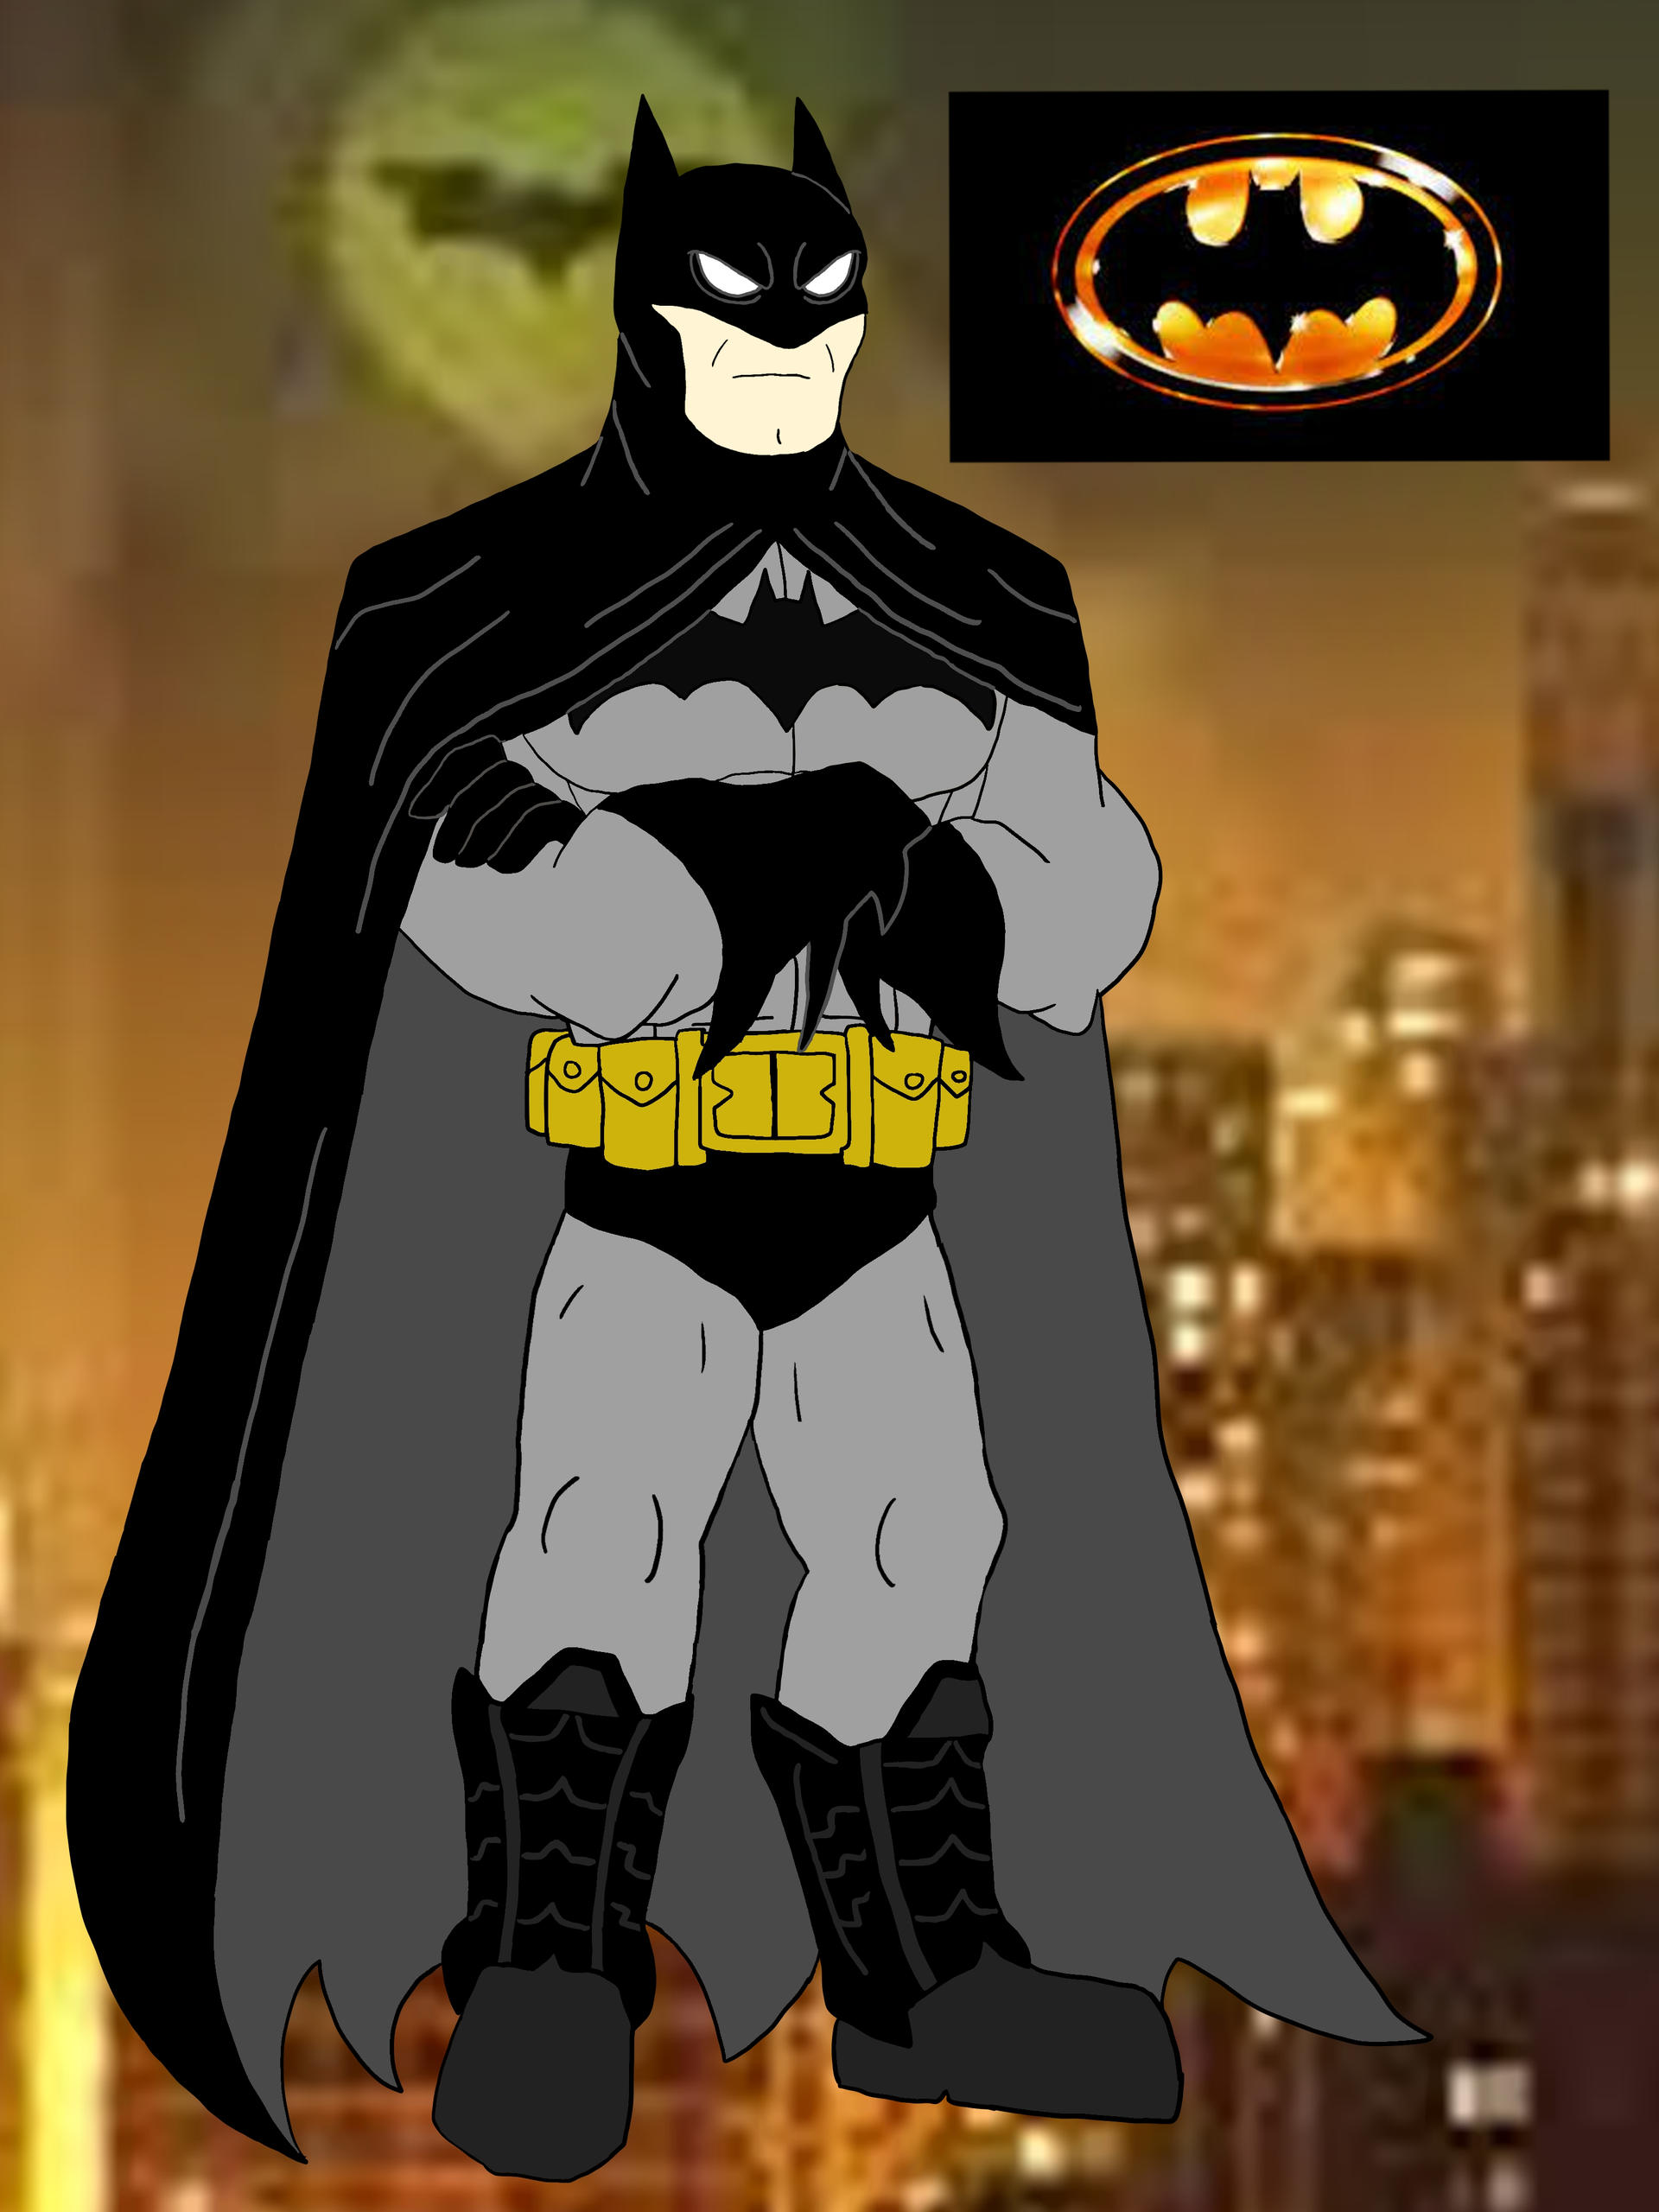 DC Superheroes #2: Batman by D-Field22 on DeviantArt